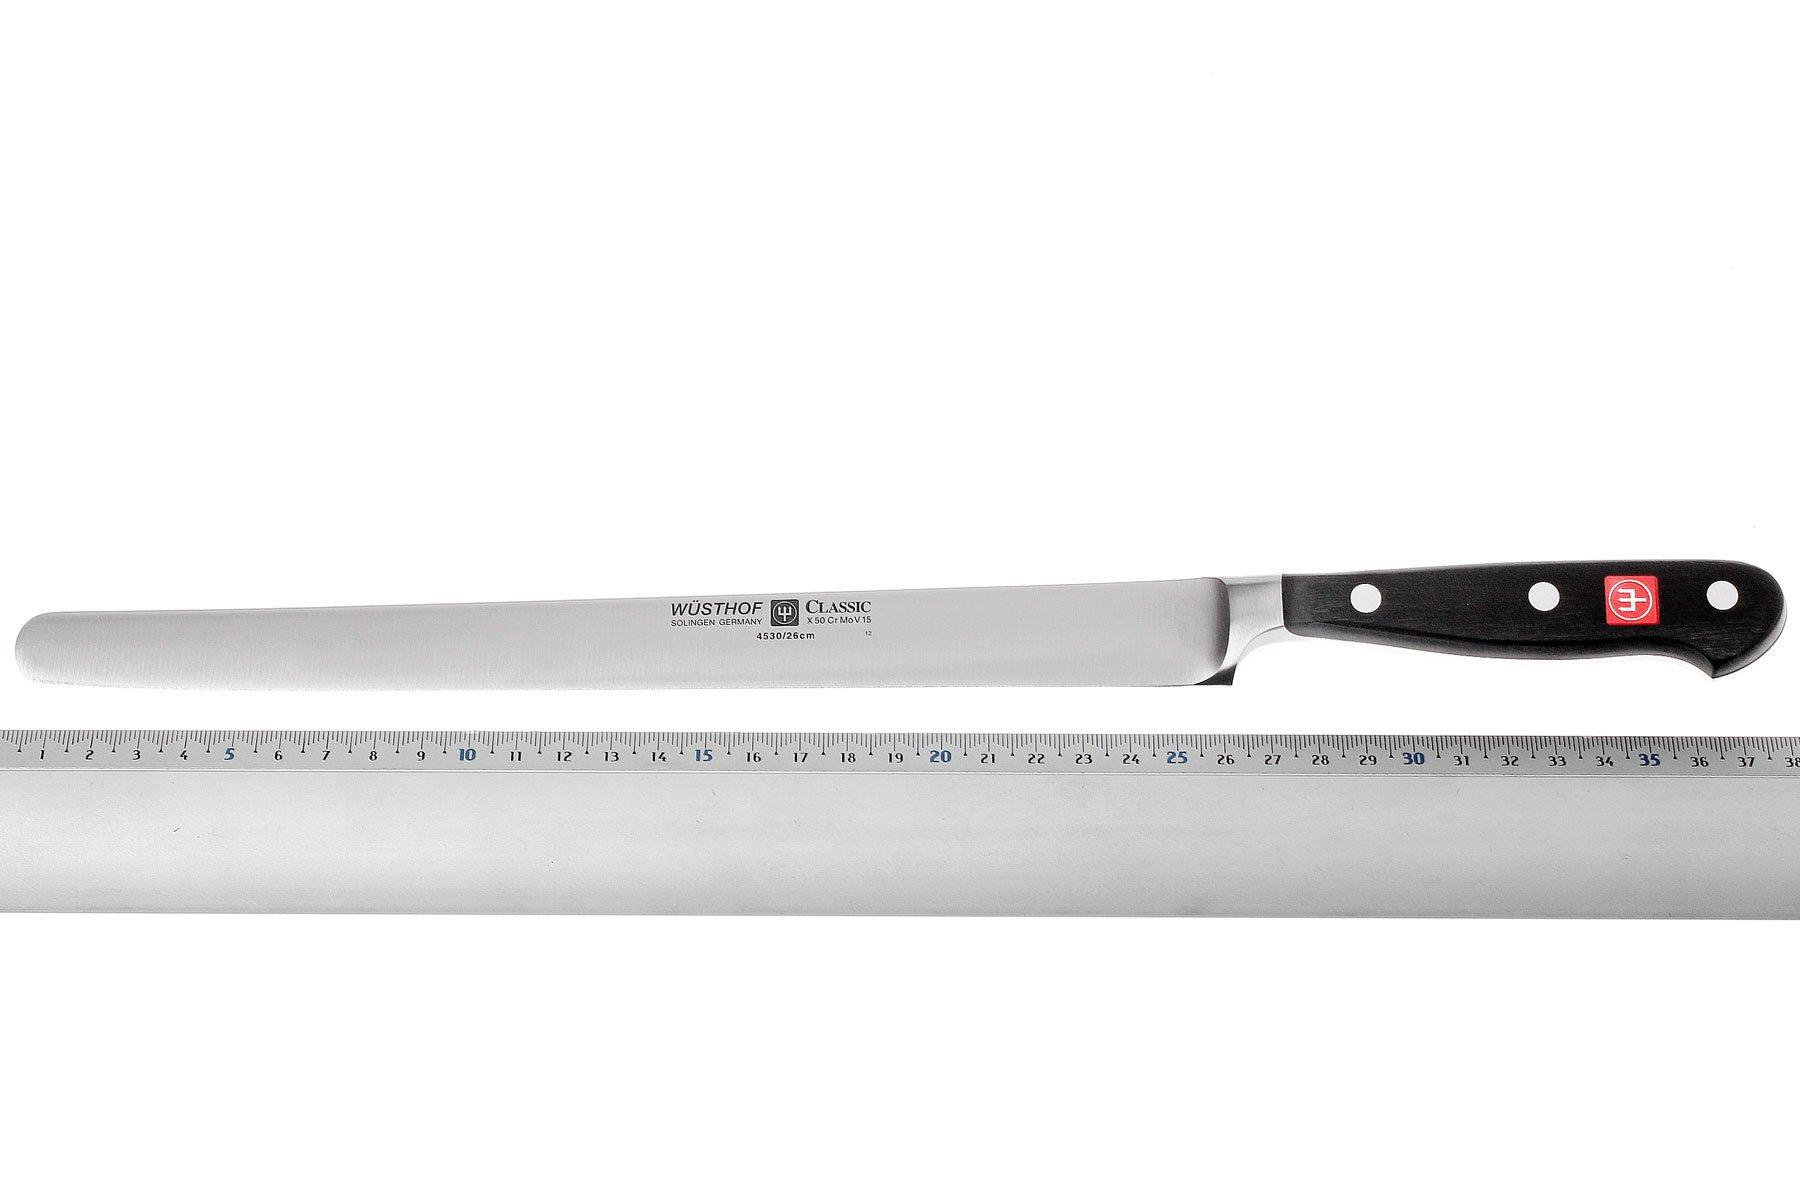 Wusthof Germany - Classic - Salmon knife - 4531/26 - Knife